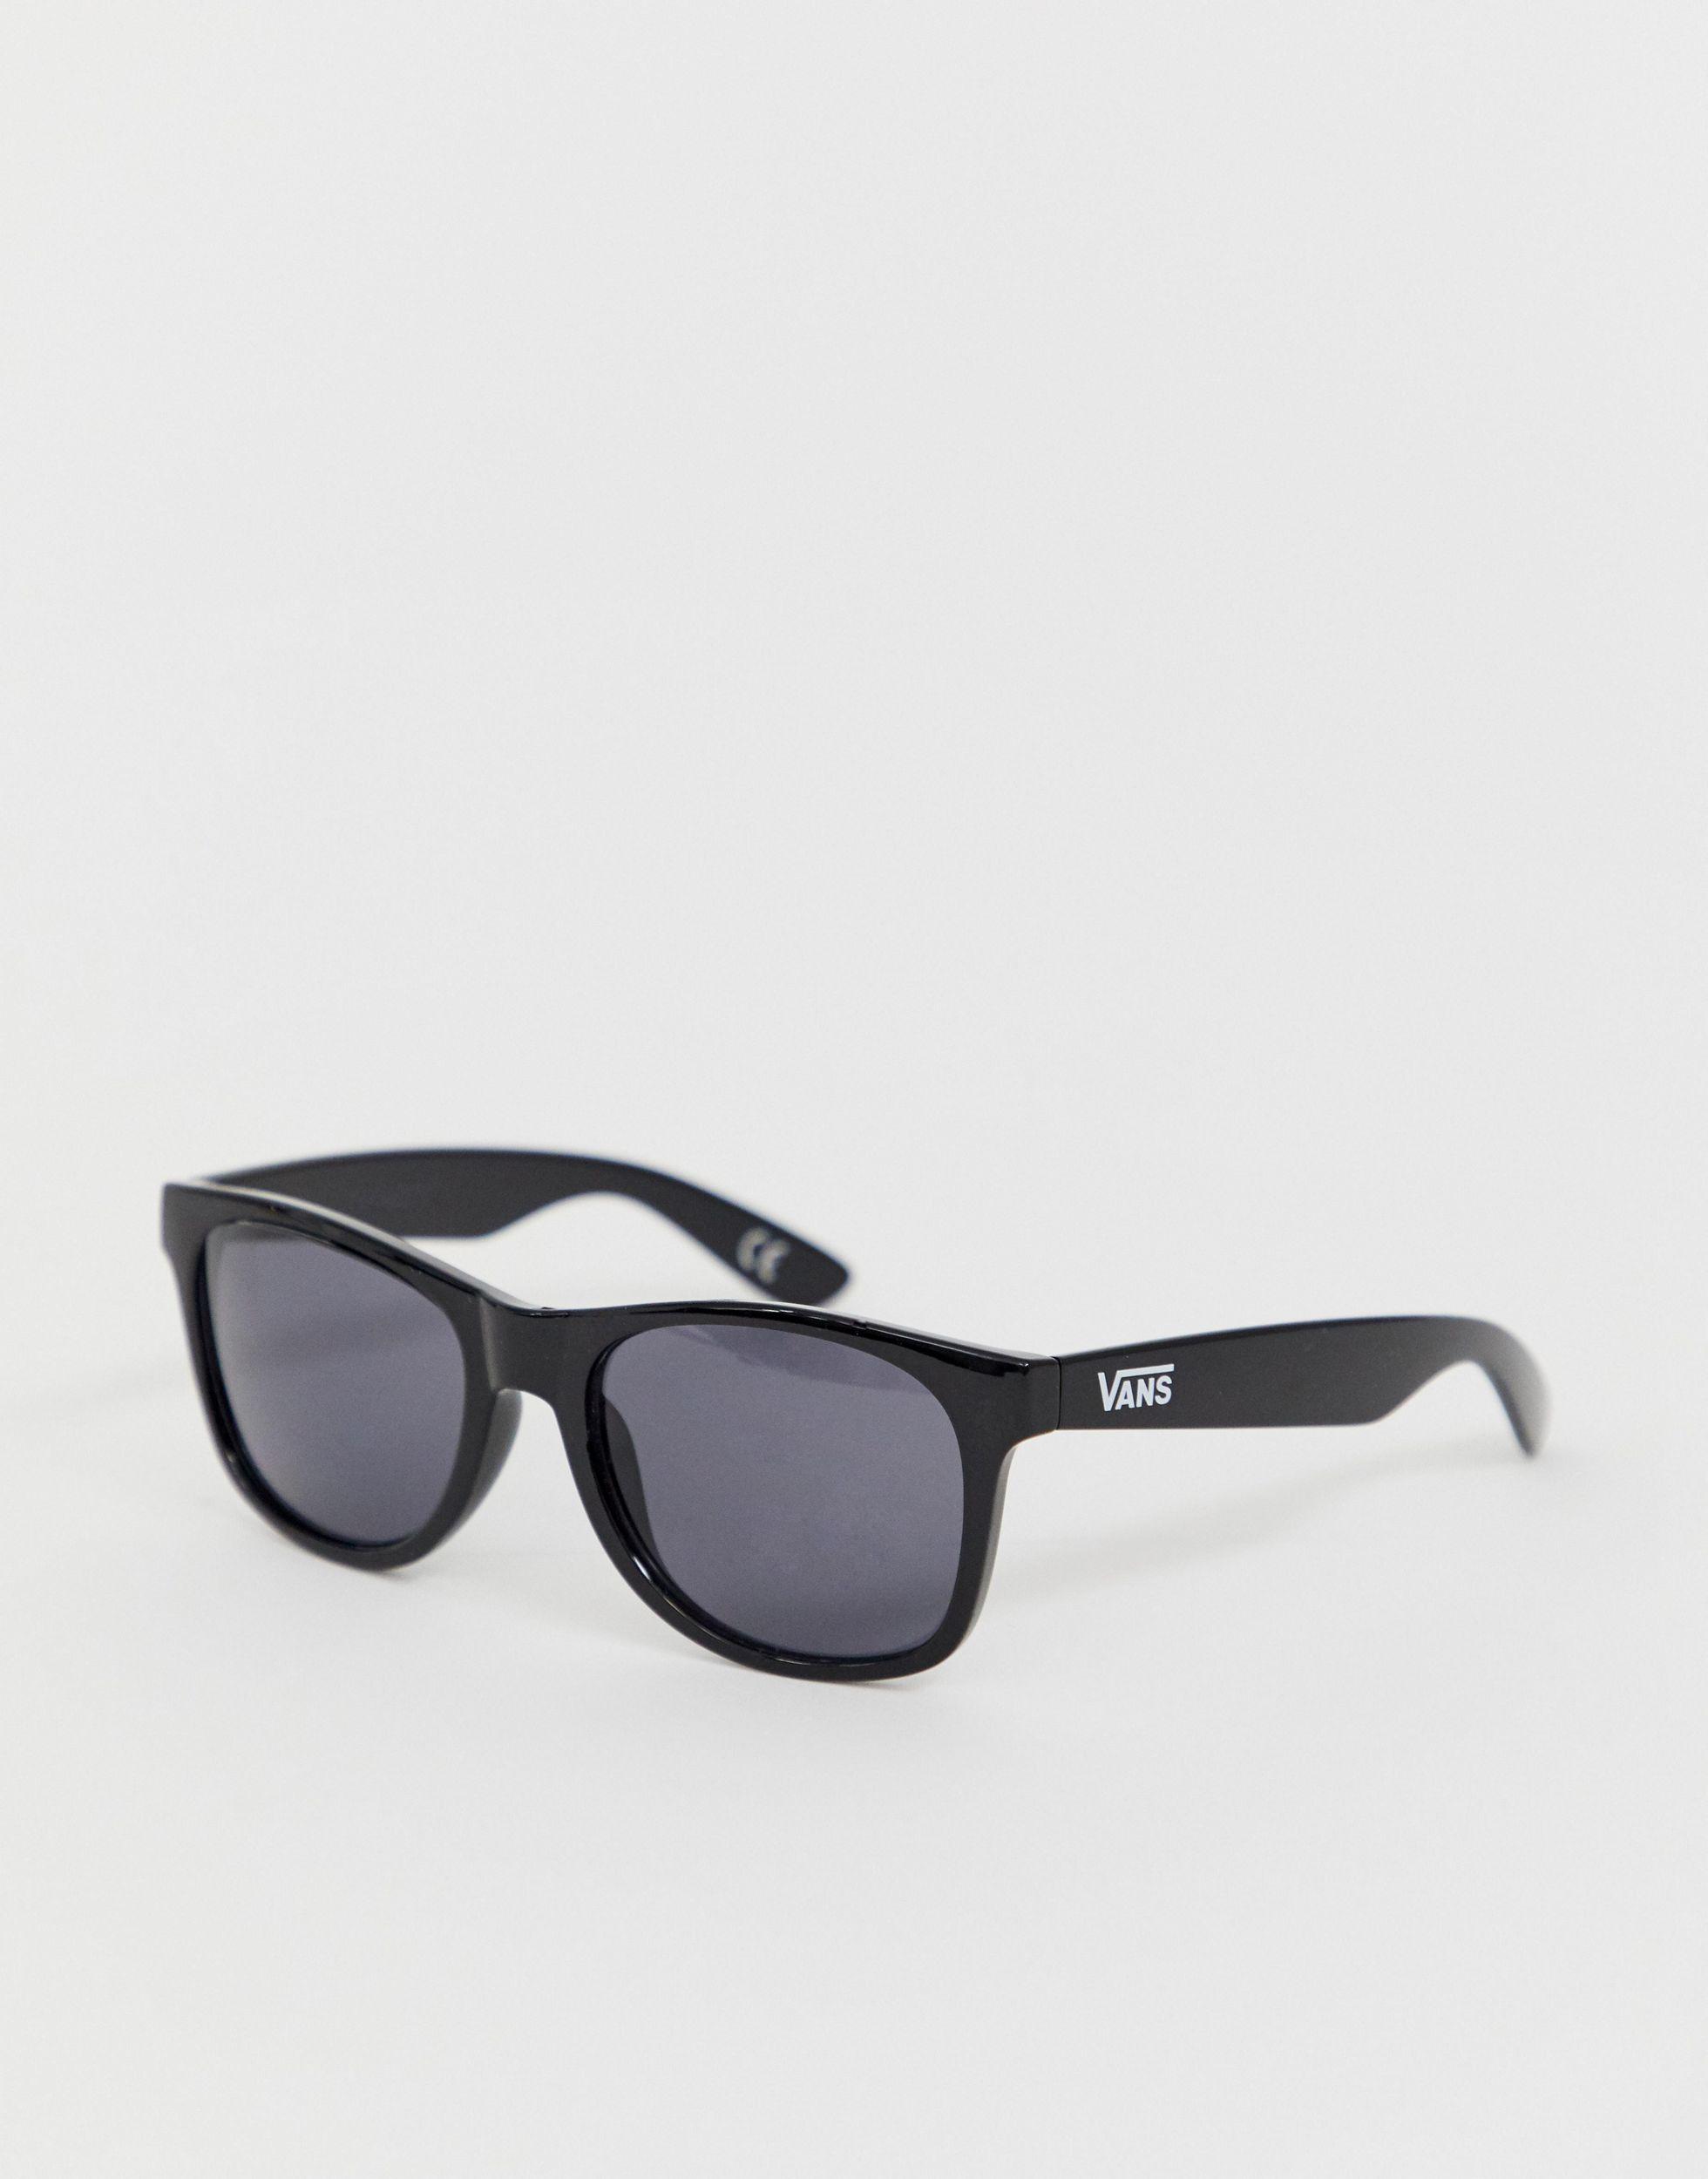 Vans Spicoli 4 Shades Sunglasses in Black for Men - Lyst